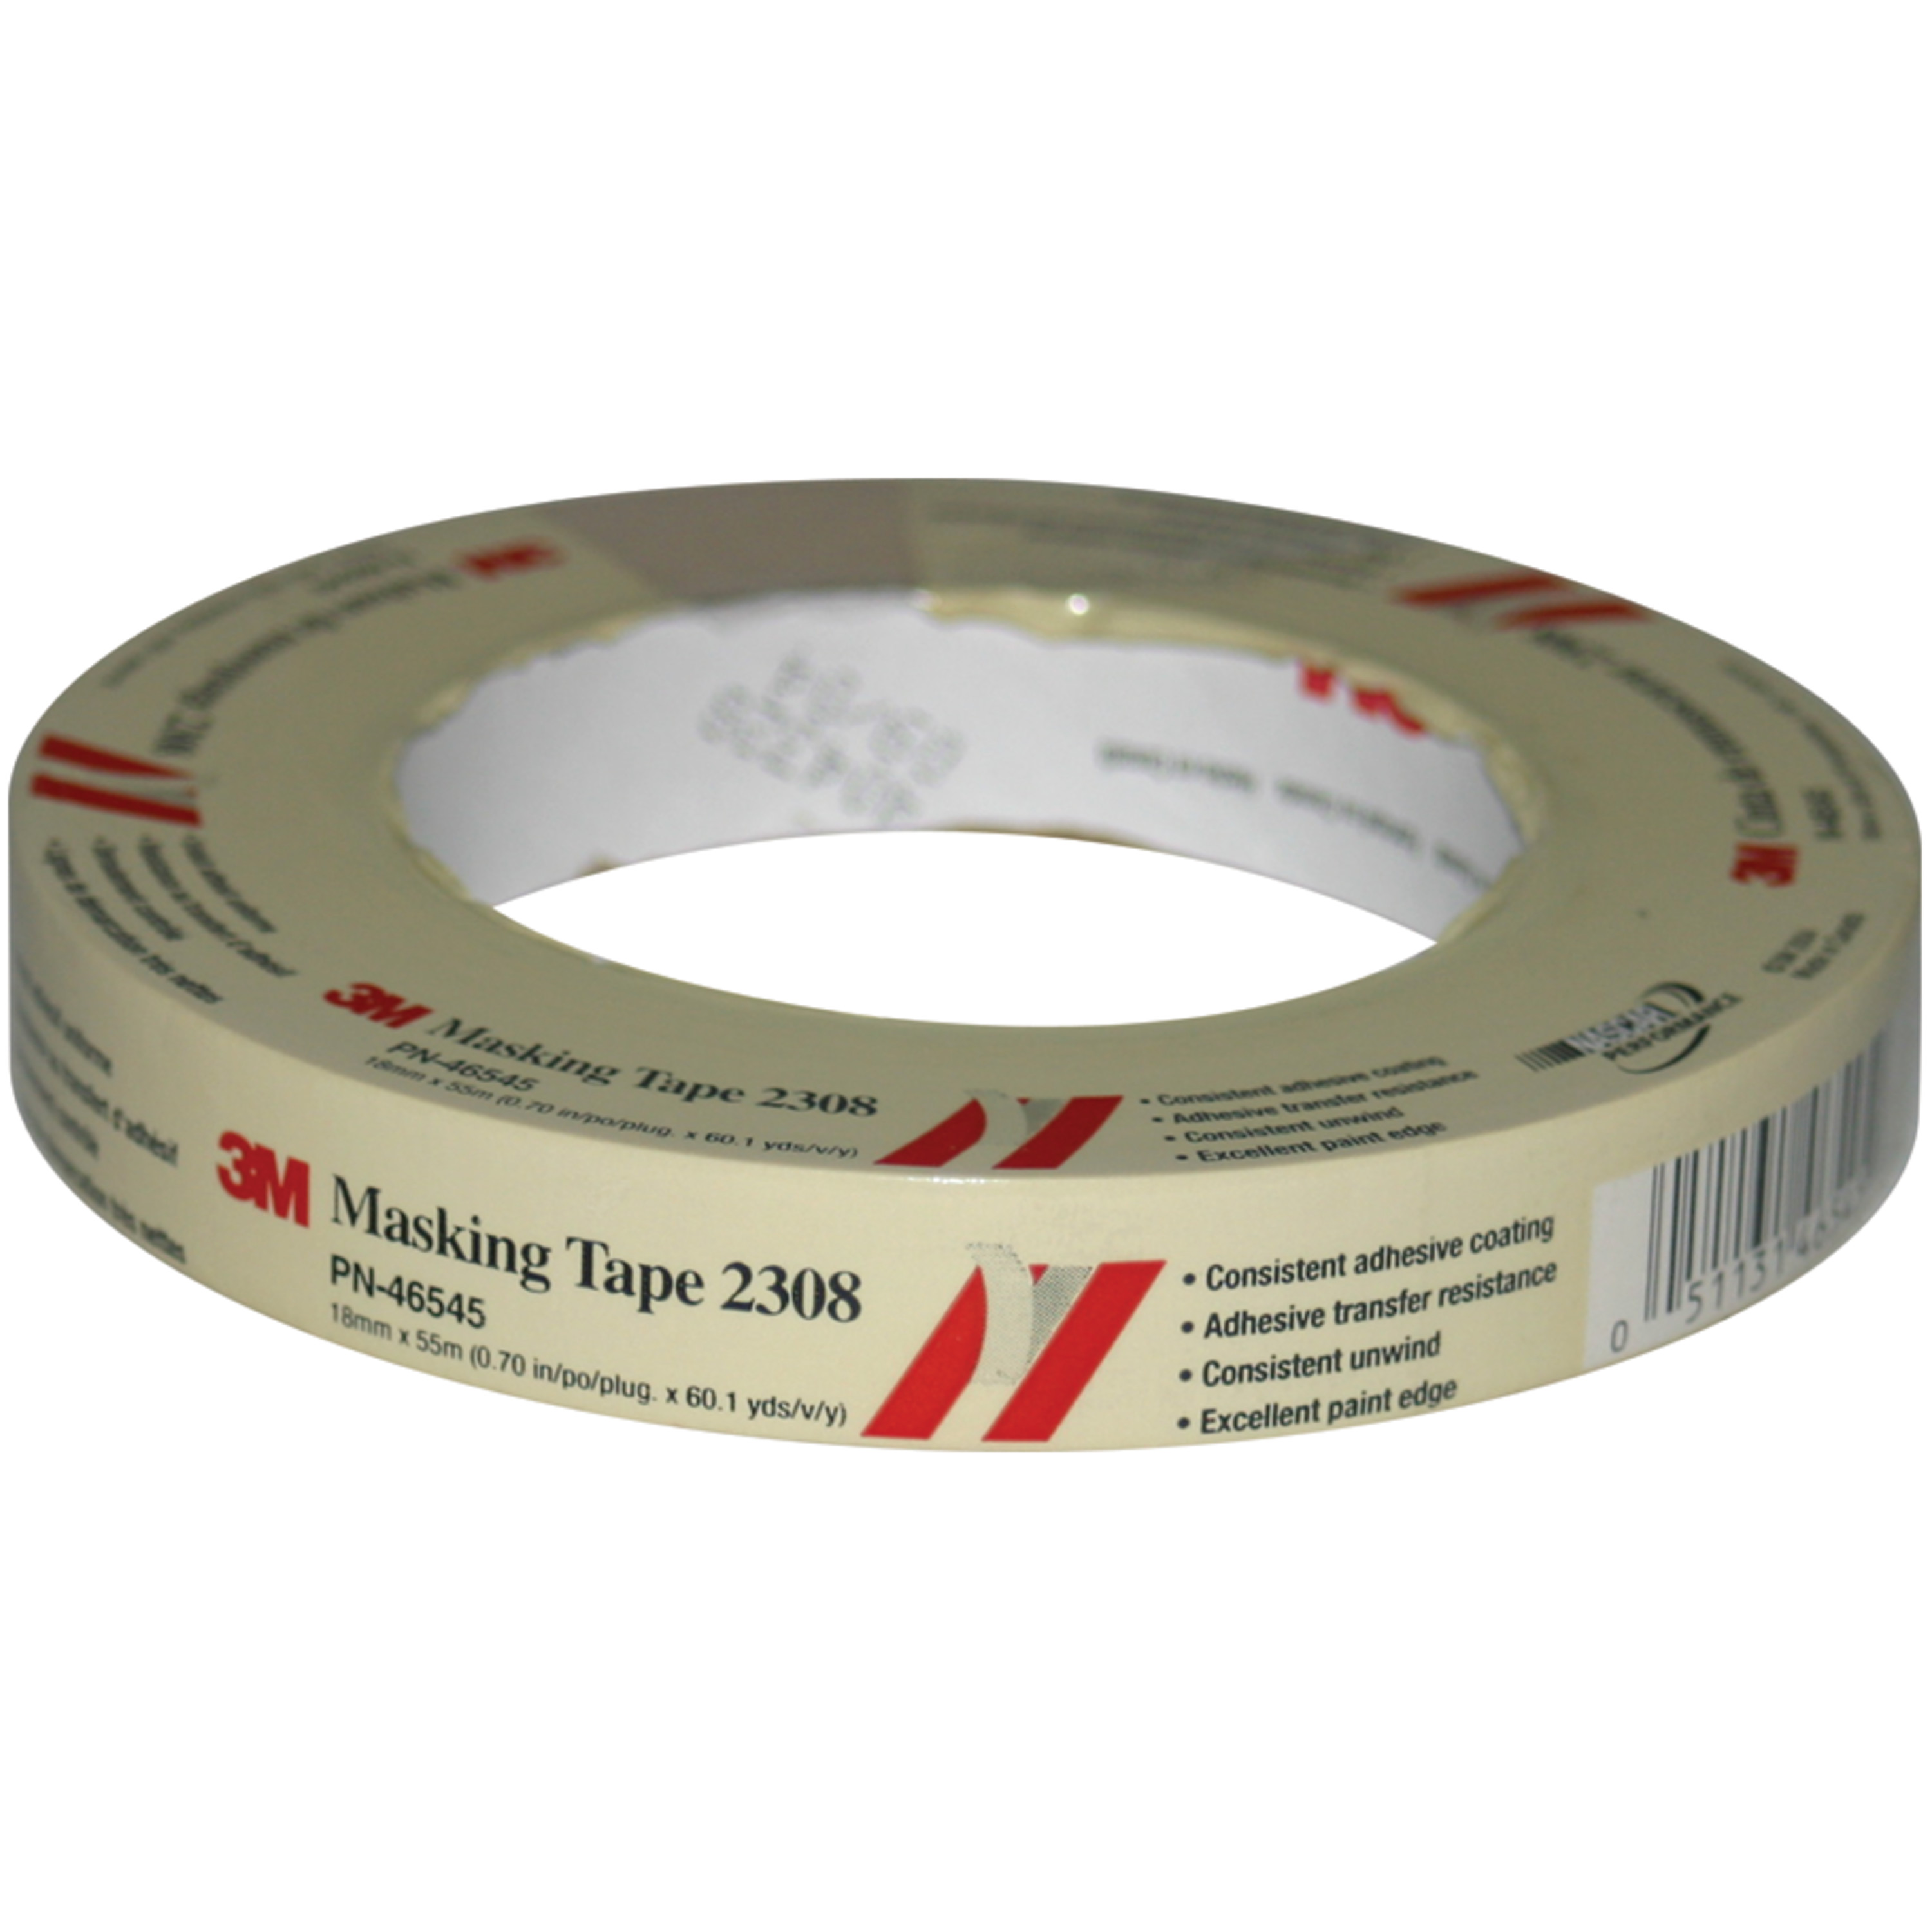 3M™ Masking Tape 2308, 46545, 18 mm x 55 m, 48 rolls per case